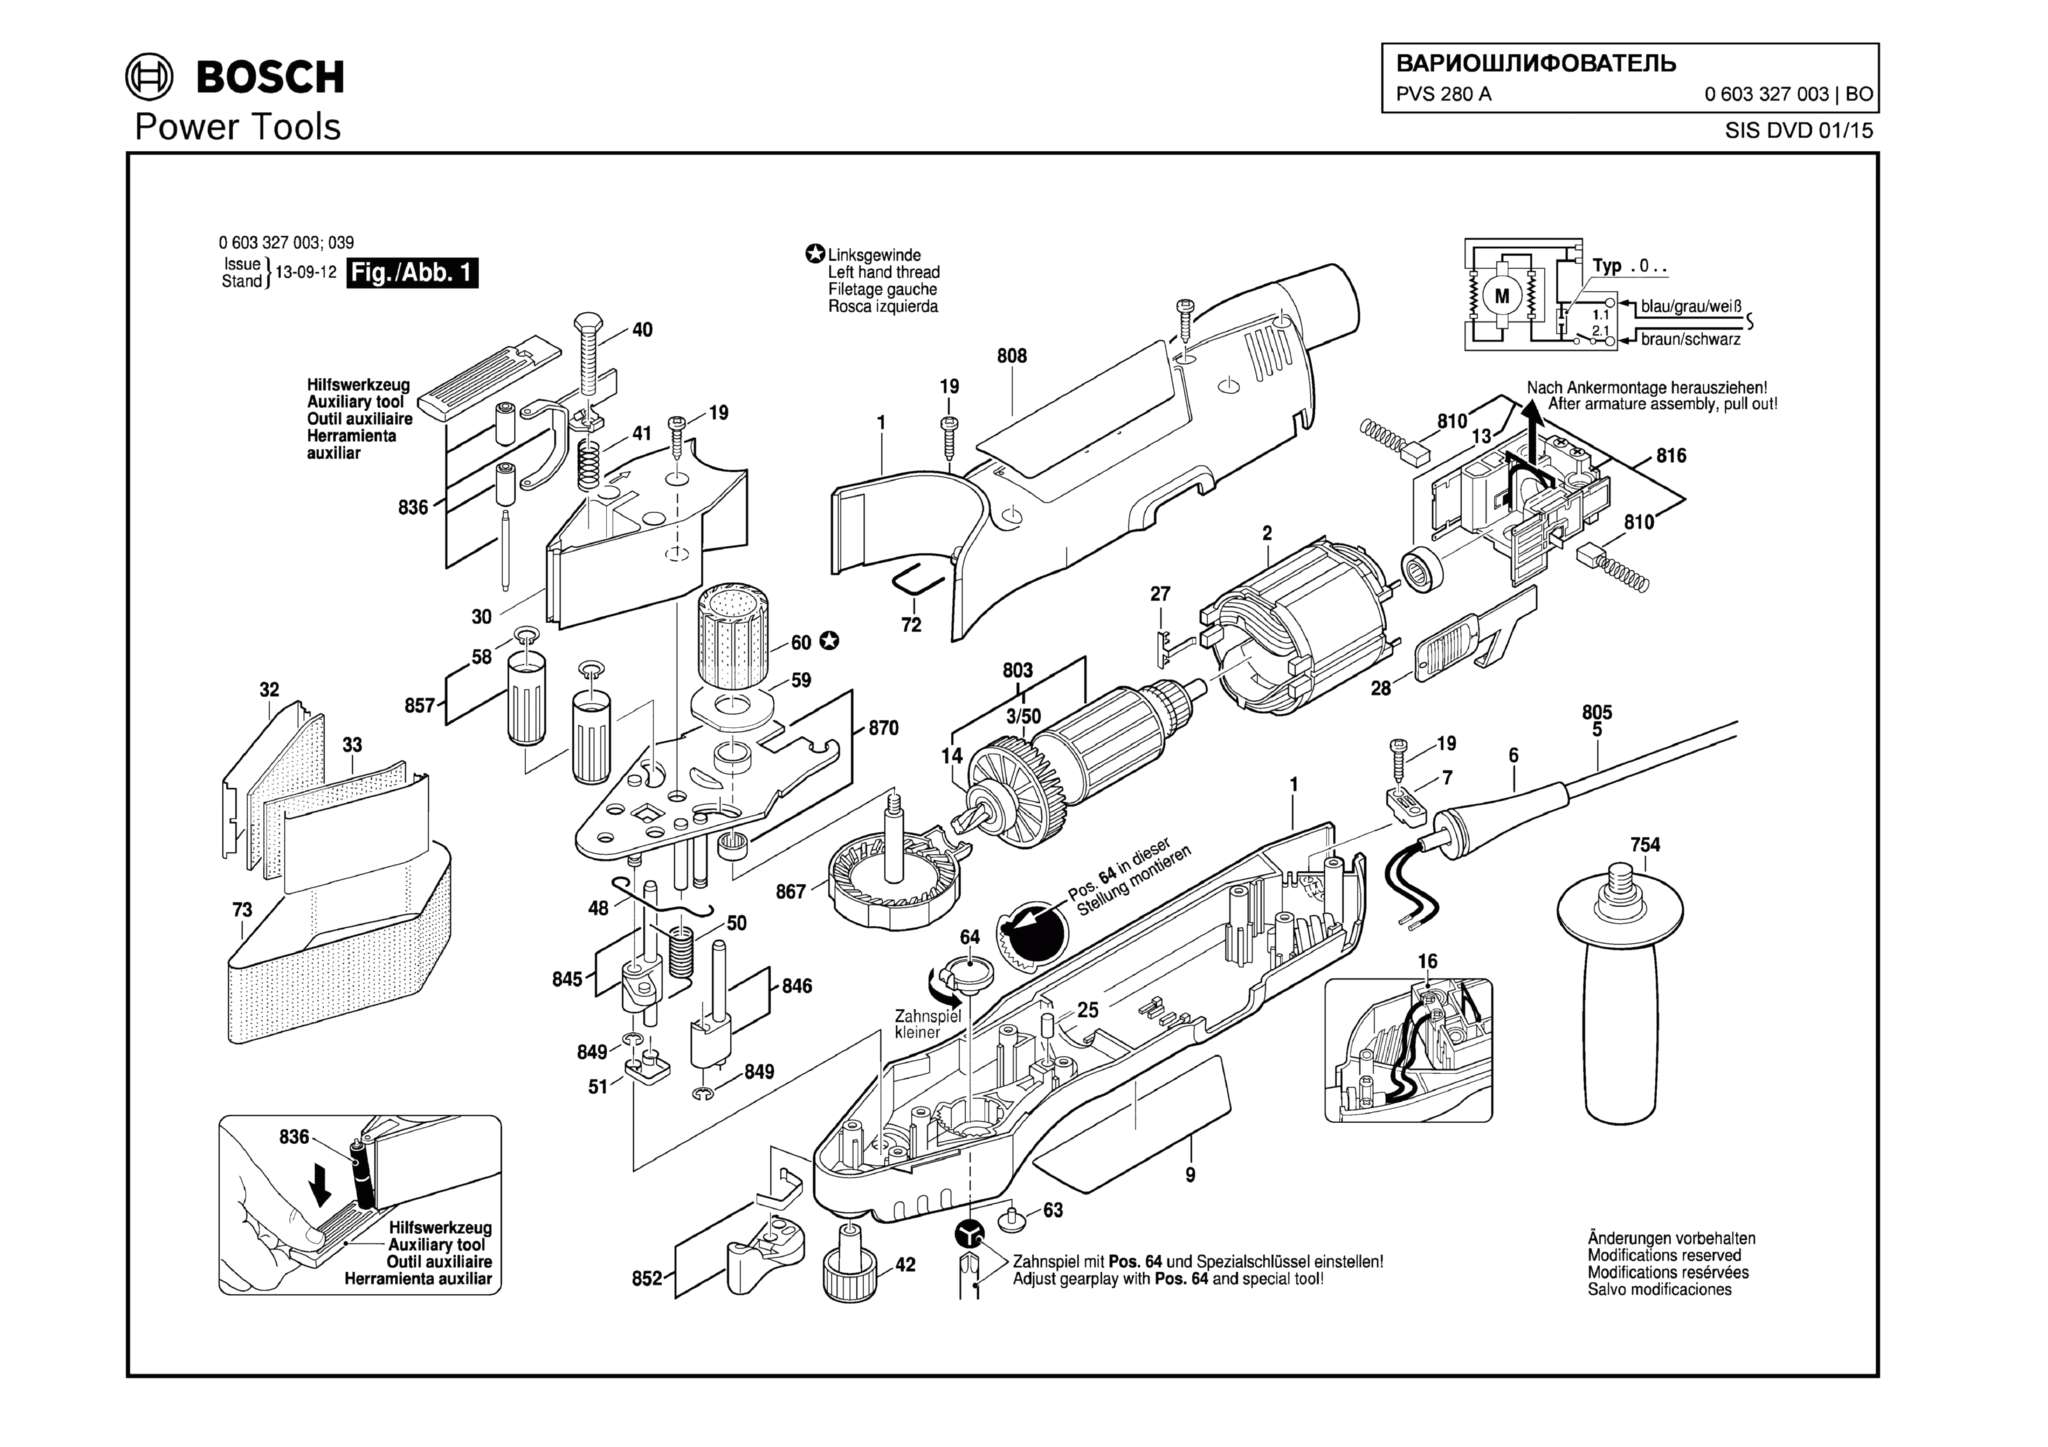 Запчасти, схема и деталировка Bosch PVS 280 A (ТИП 0603327003)